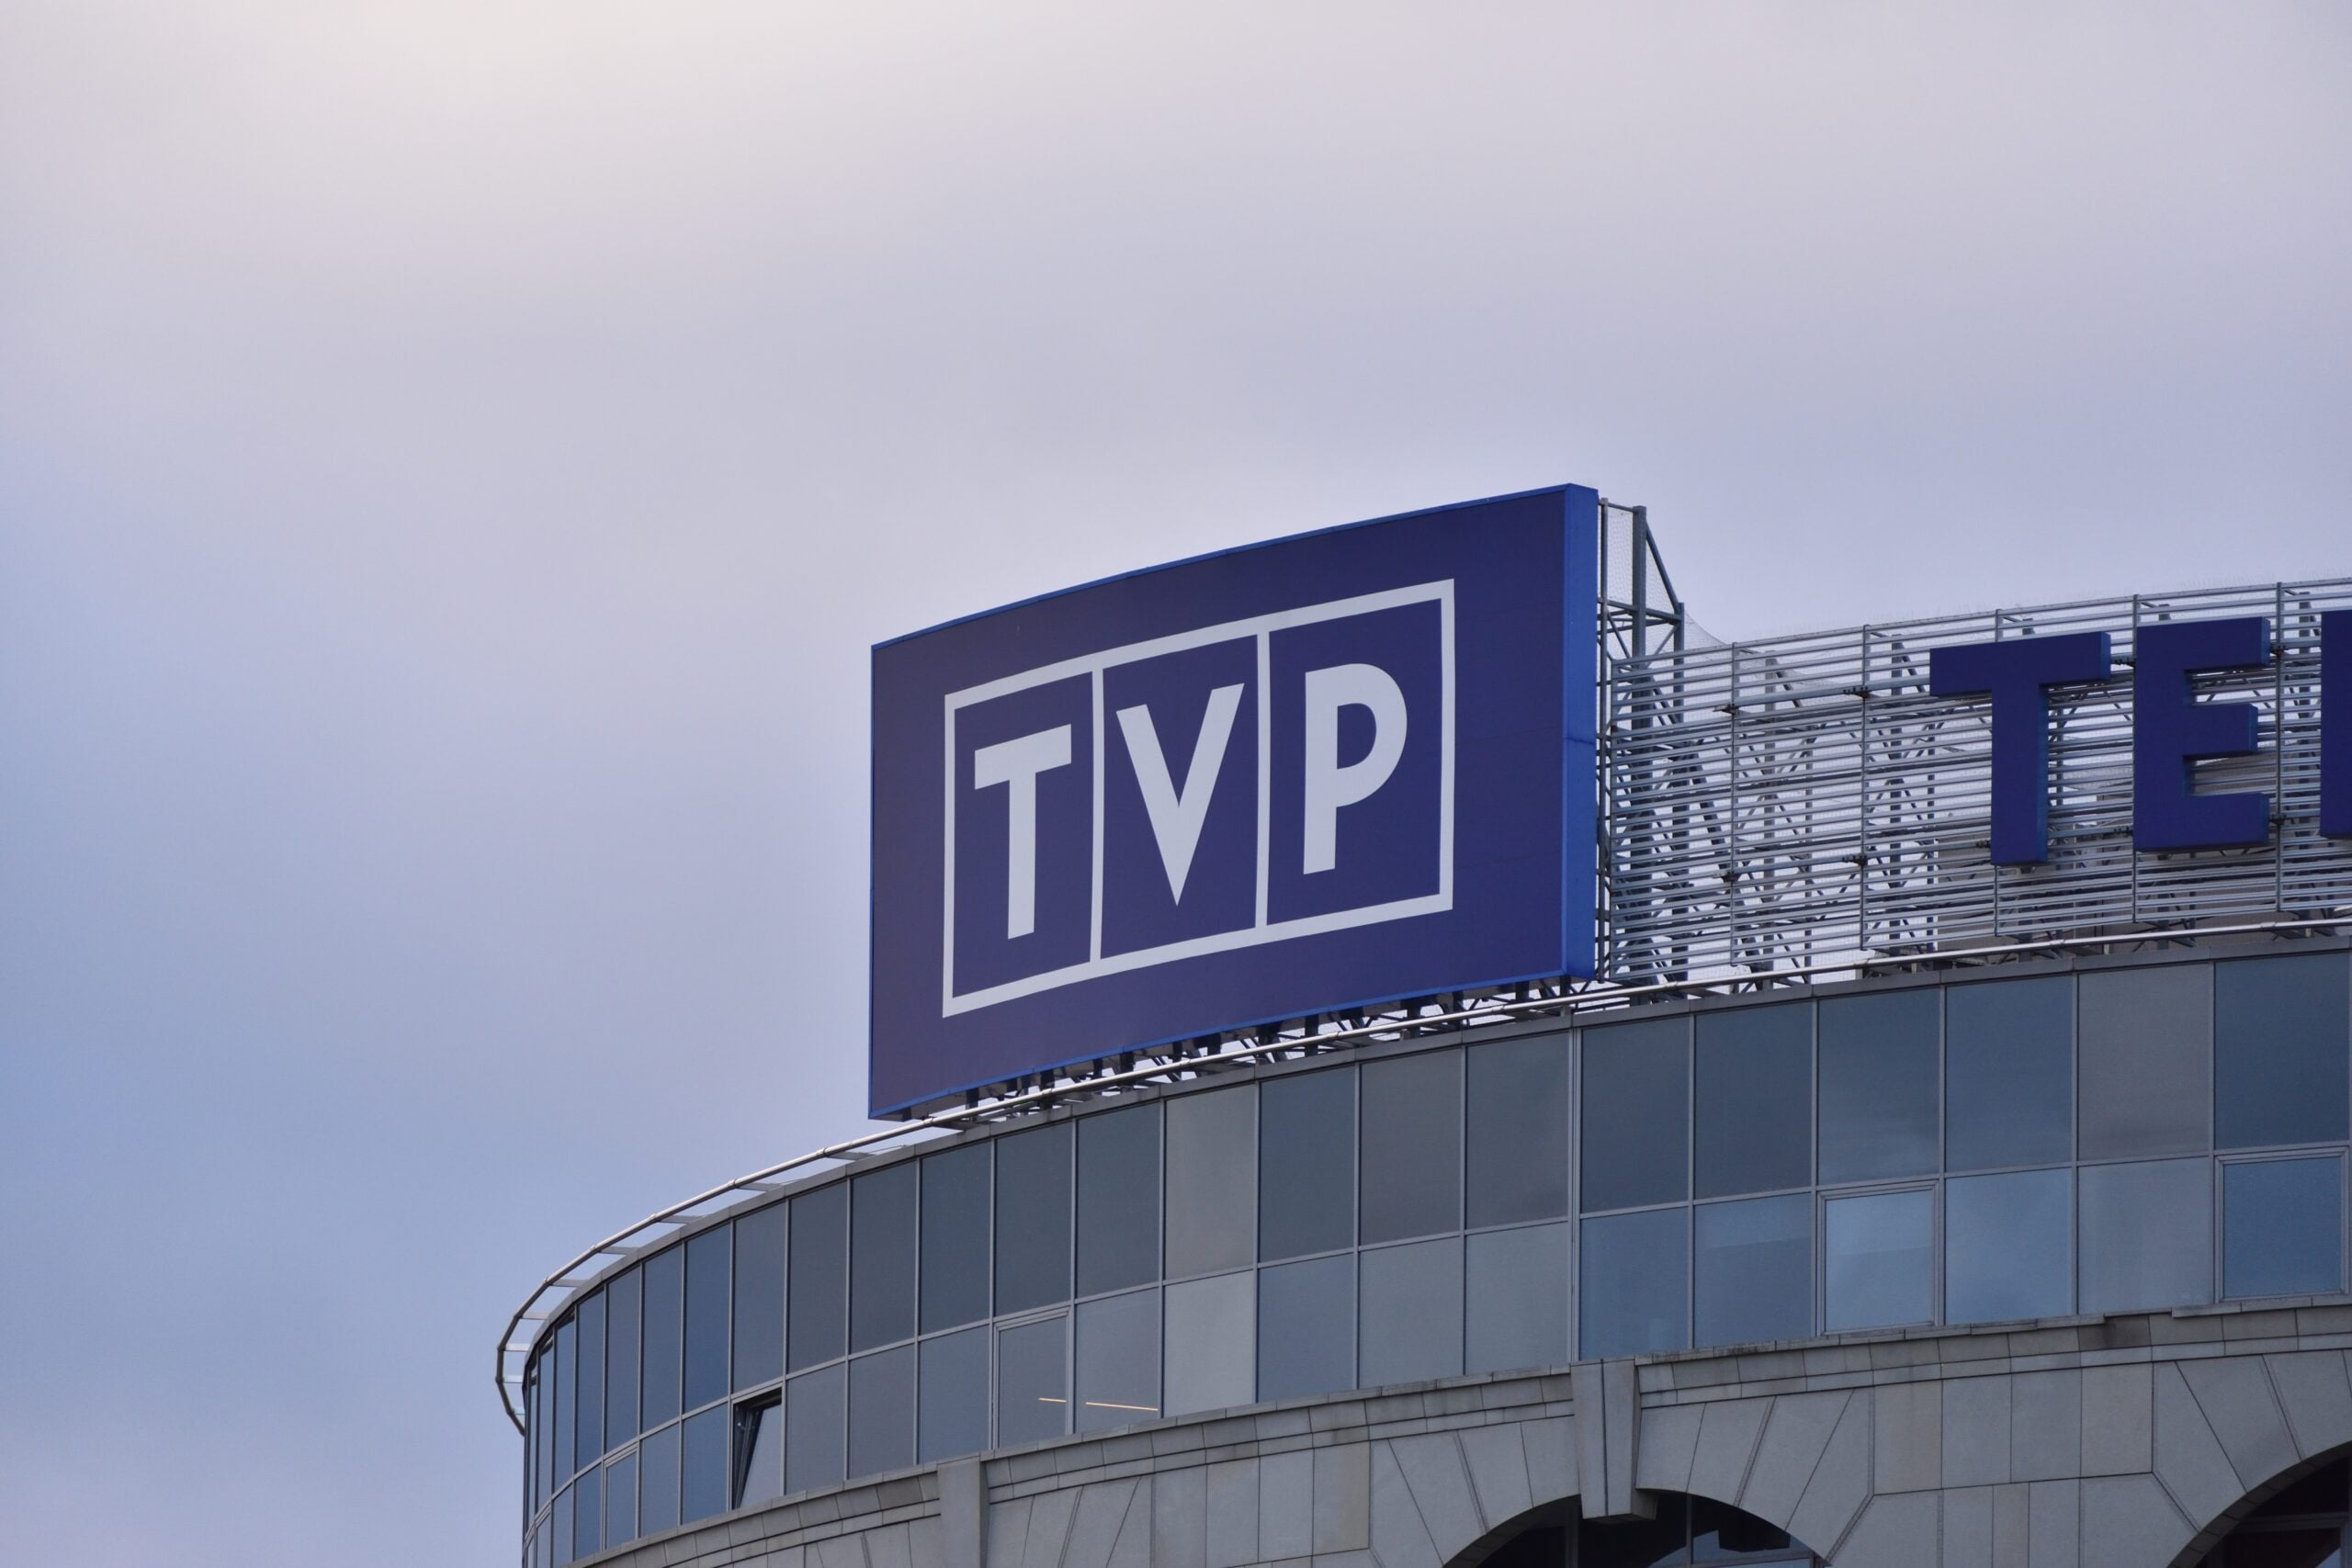 Szyld z logo TVP na budynku.